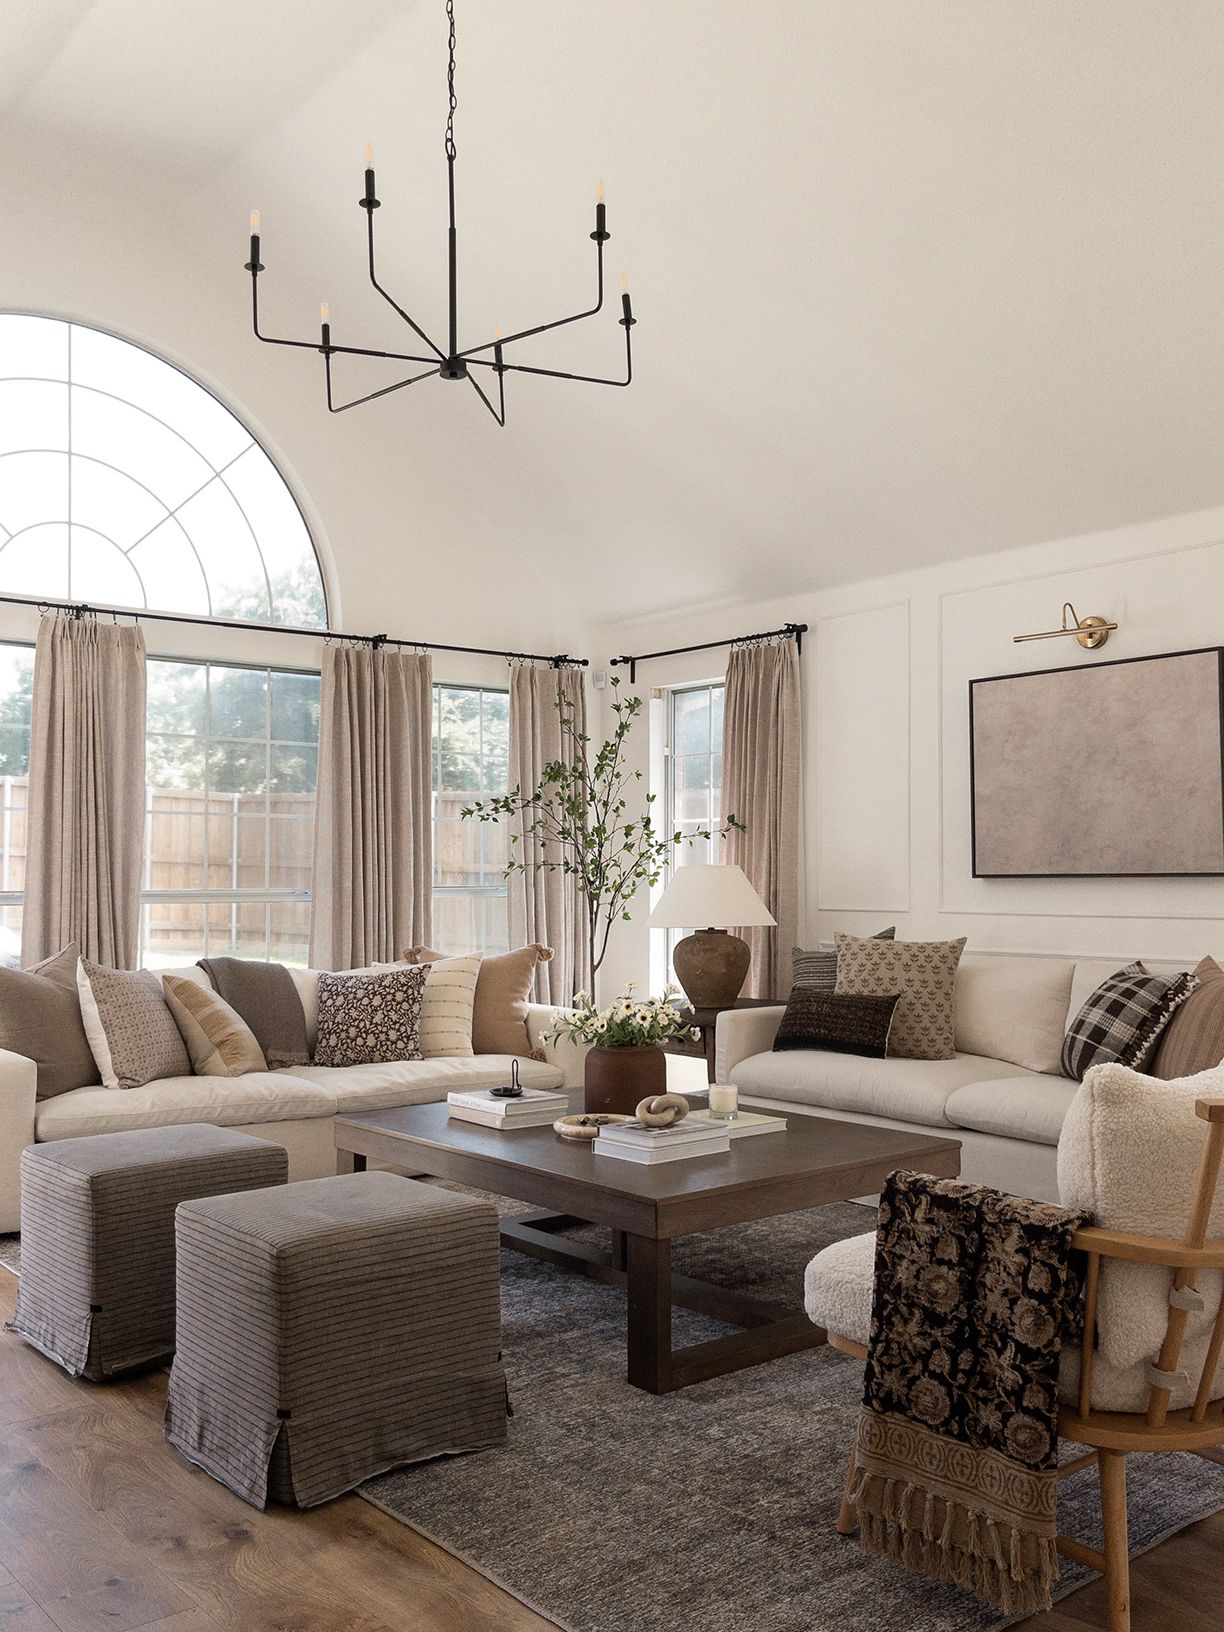 20 Beautiful Living Room Built-In Ideas